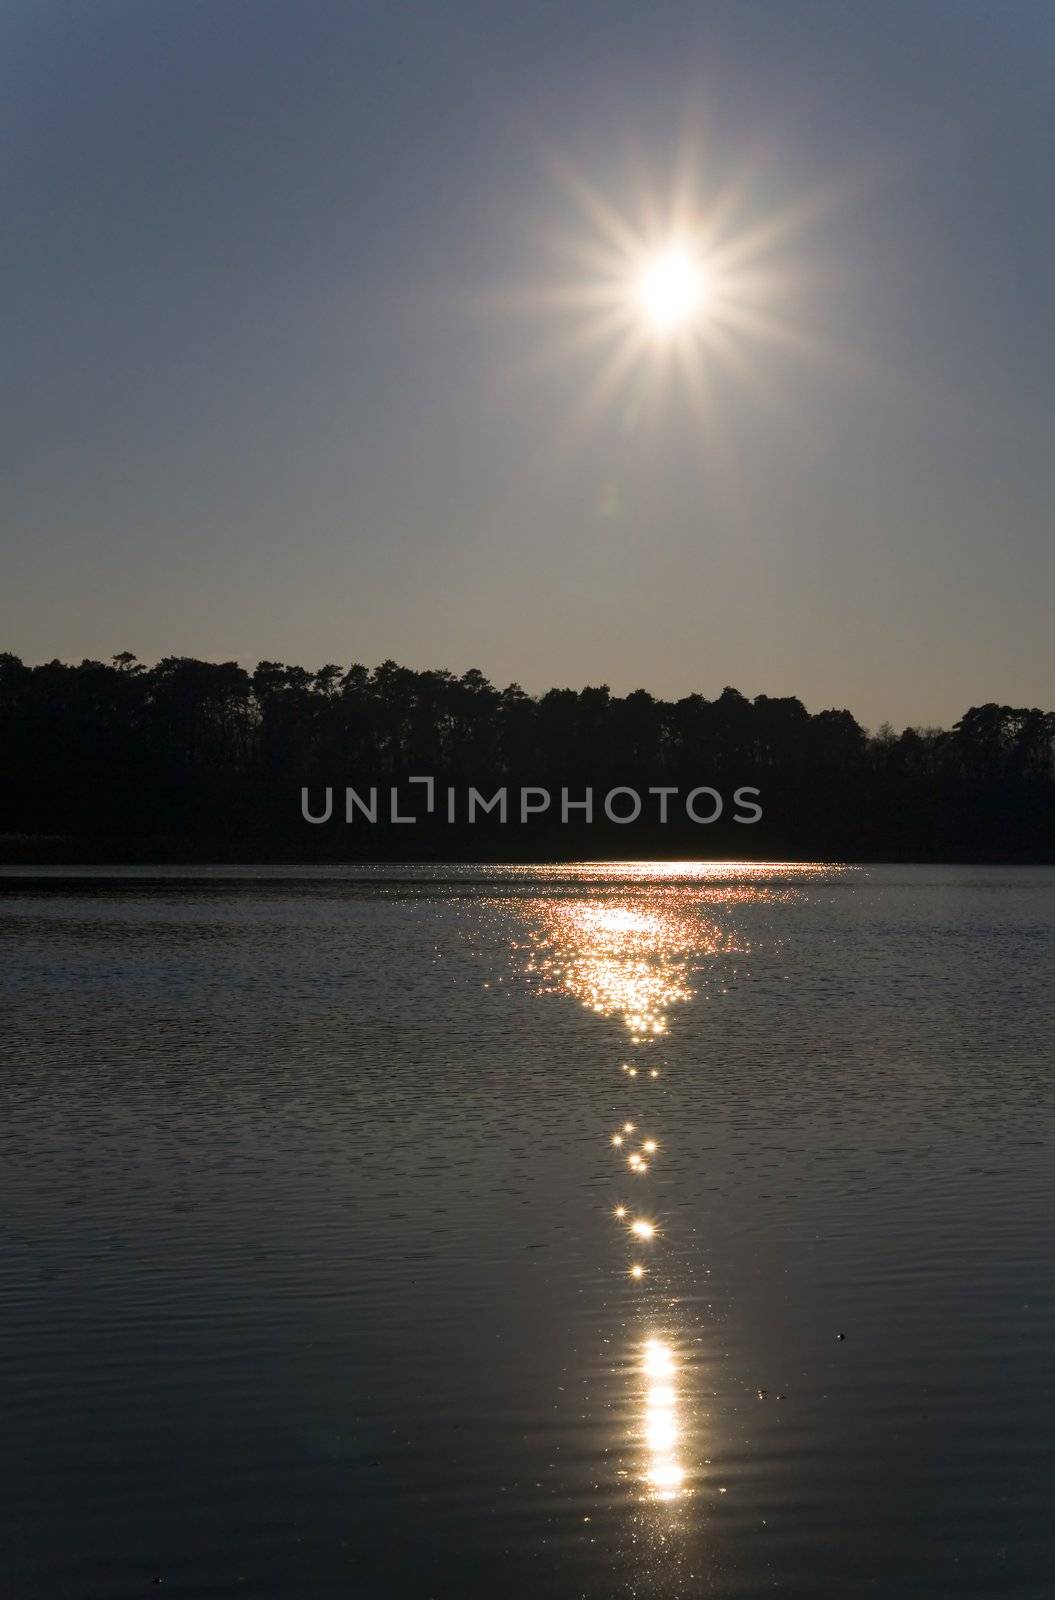 starry sun on the blue sky over the lake (Poland)